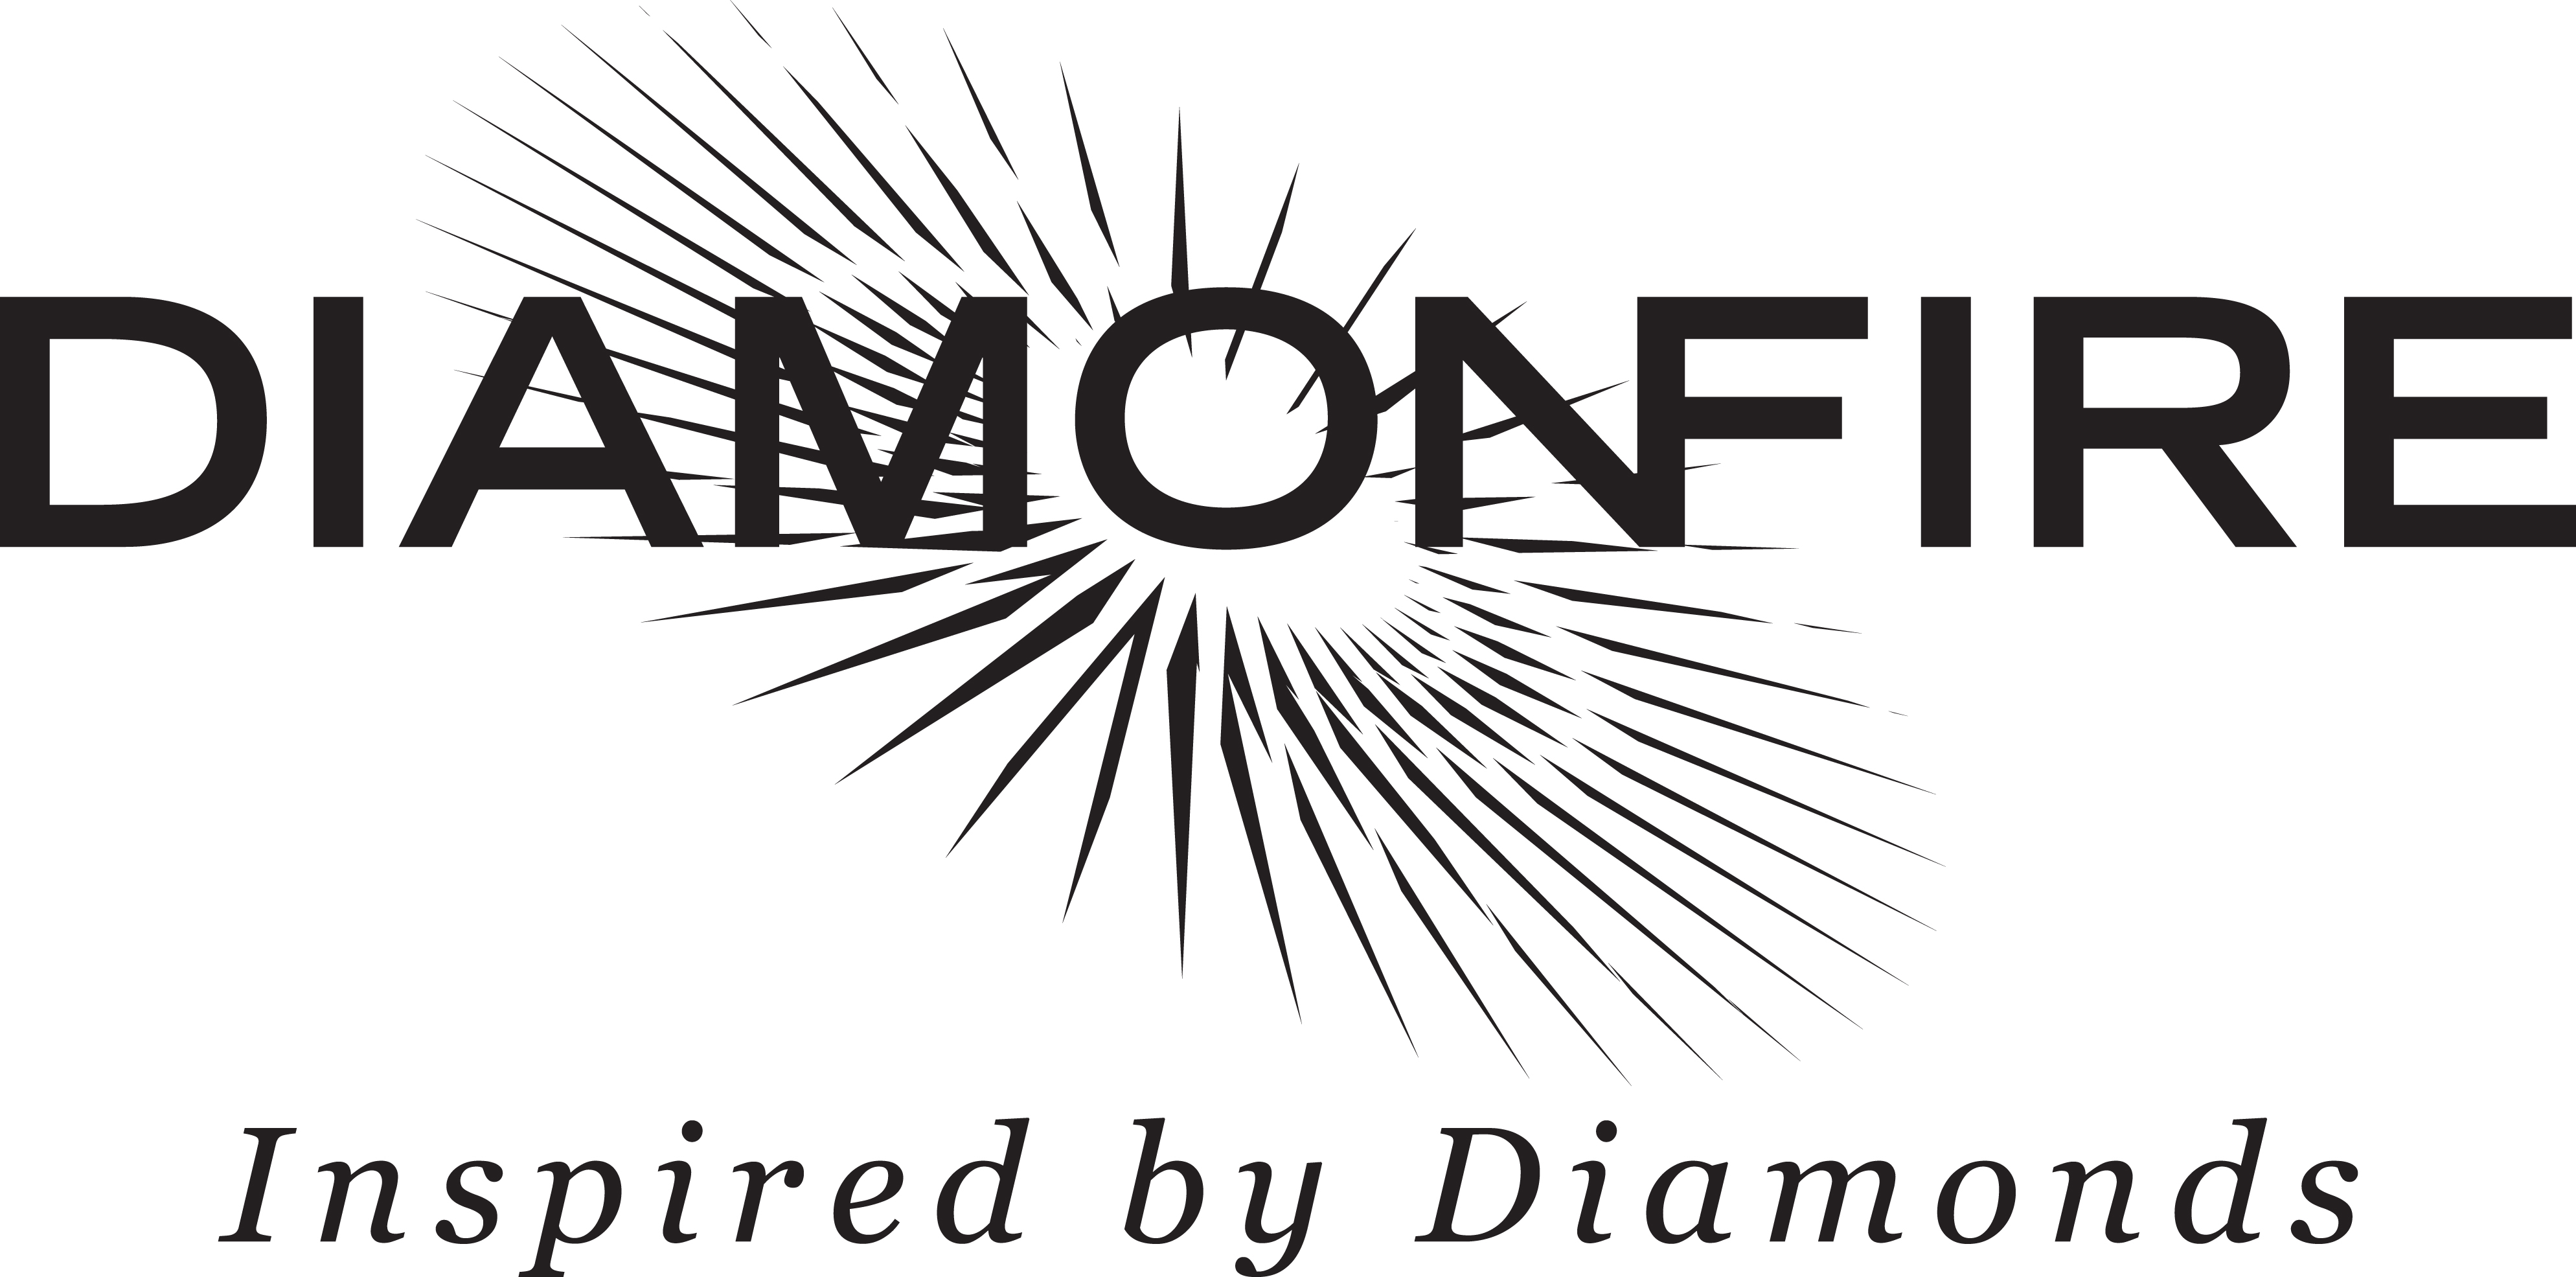 Diamonfire